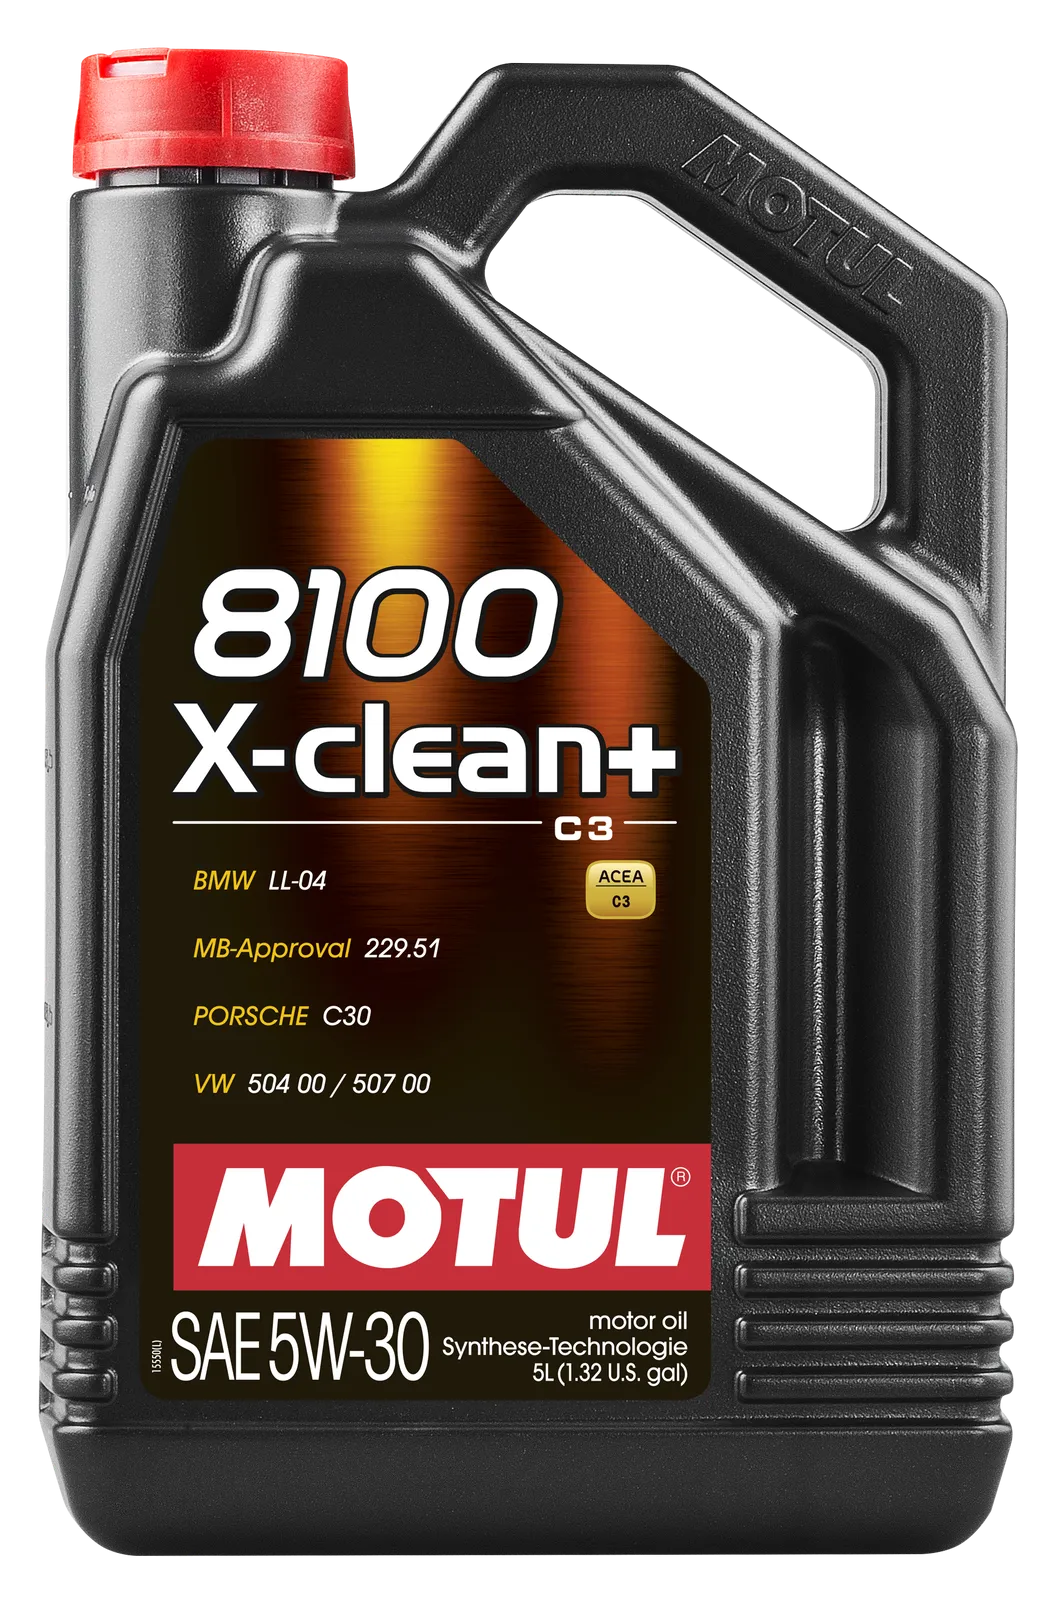 MOTUL 8100 X-CLEAN+ C3 5W30 Longlife-04 5W30 ACEA C3 MB 229.51 5 Liter  109220 504.00 / 507.00 C30